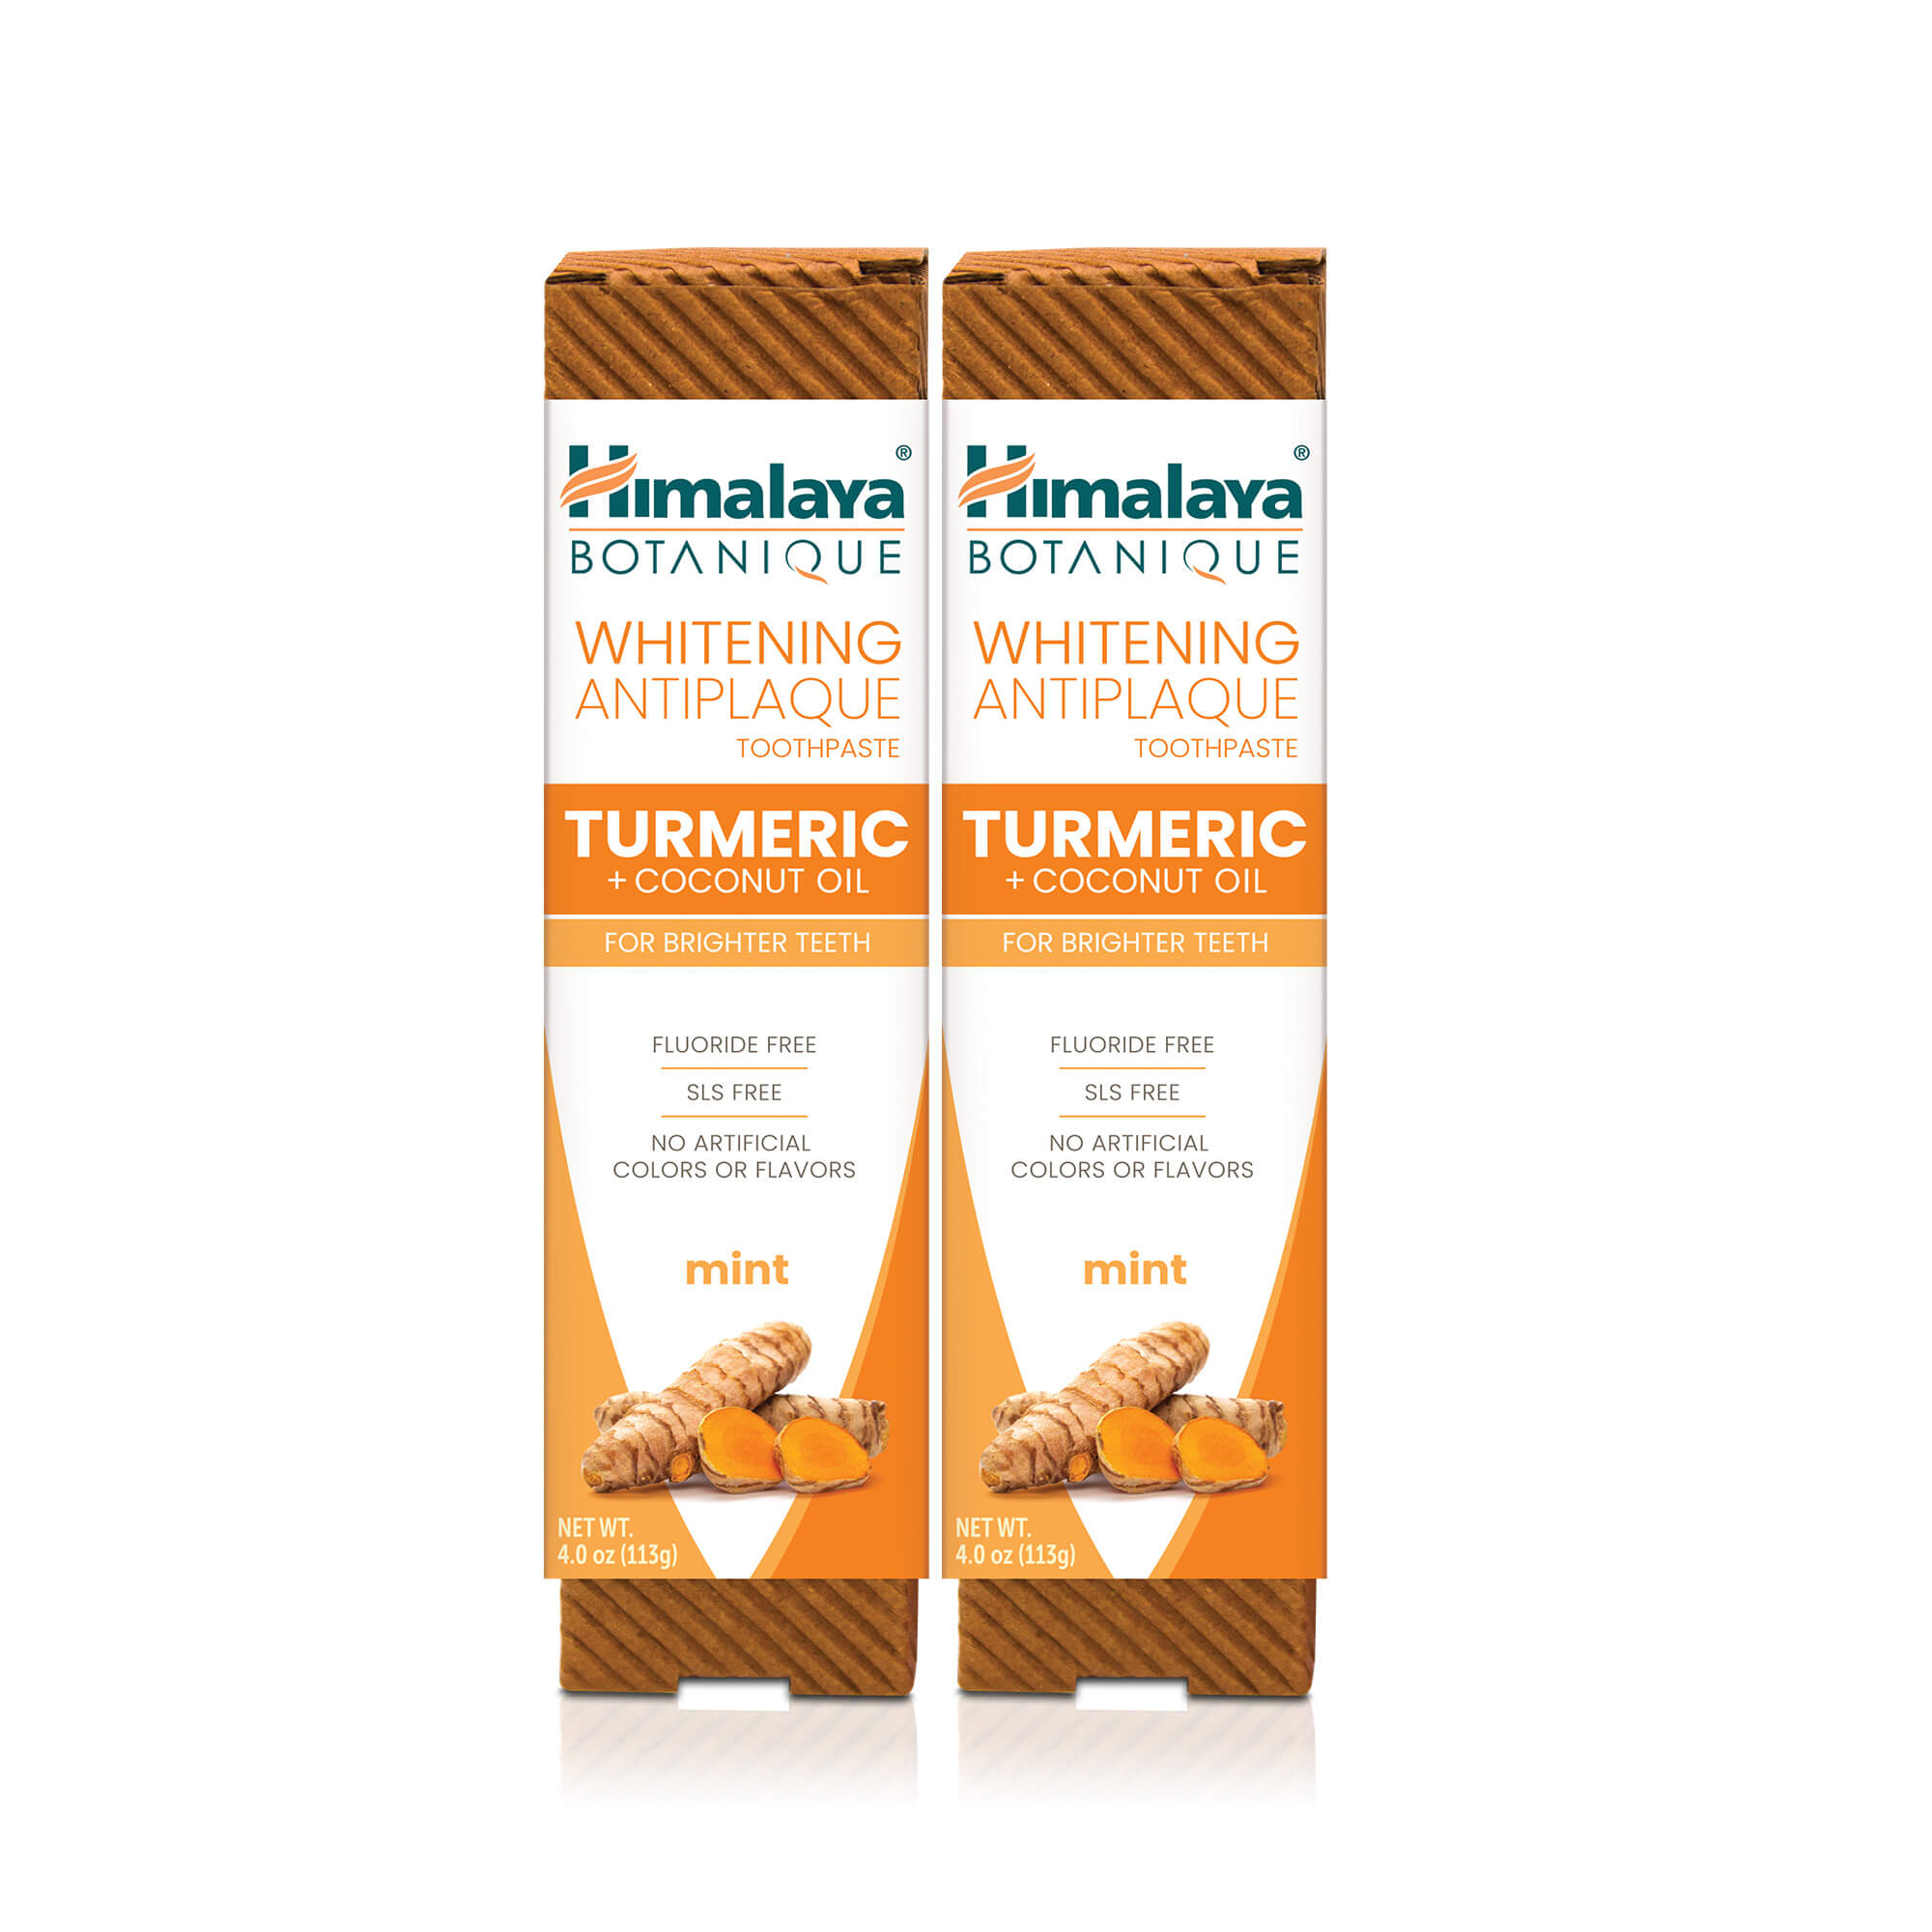 Himalaya Botanique Whitening Antiplaque Toothpaste Turmeric + Coconut Oil 113G (Pack of 2)